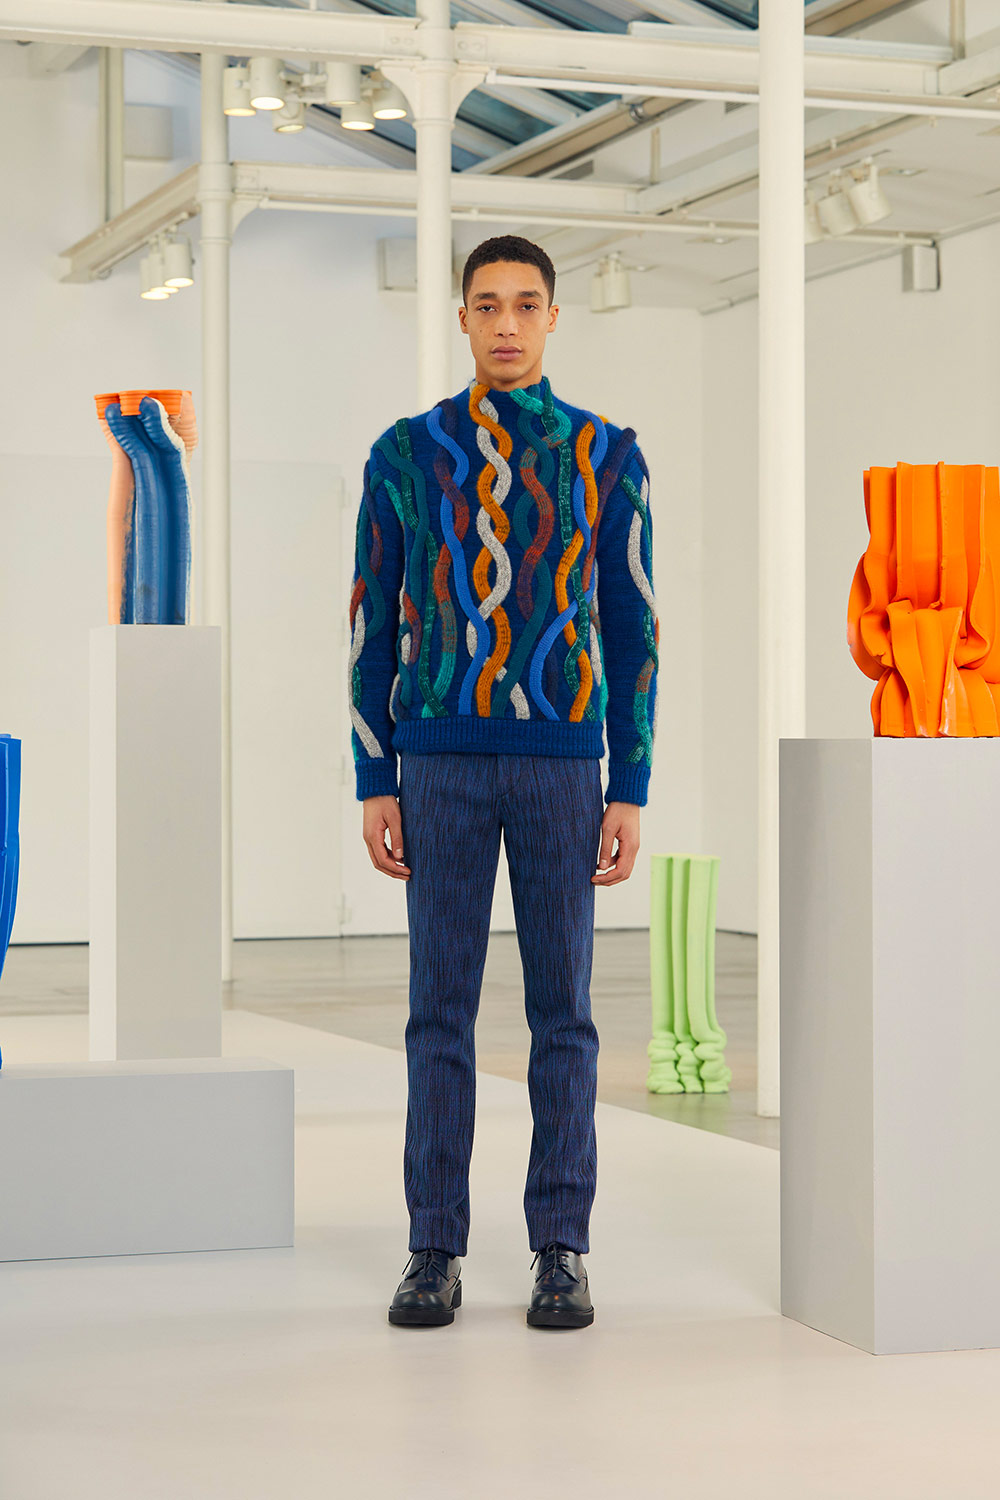 Milano Moda Uomo 2019: L’artista contemporaneo Anton Alvarez ispira Missoni